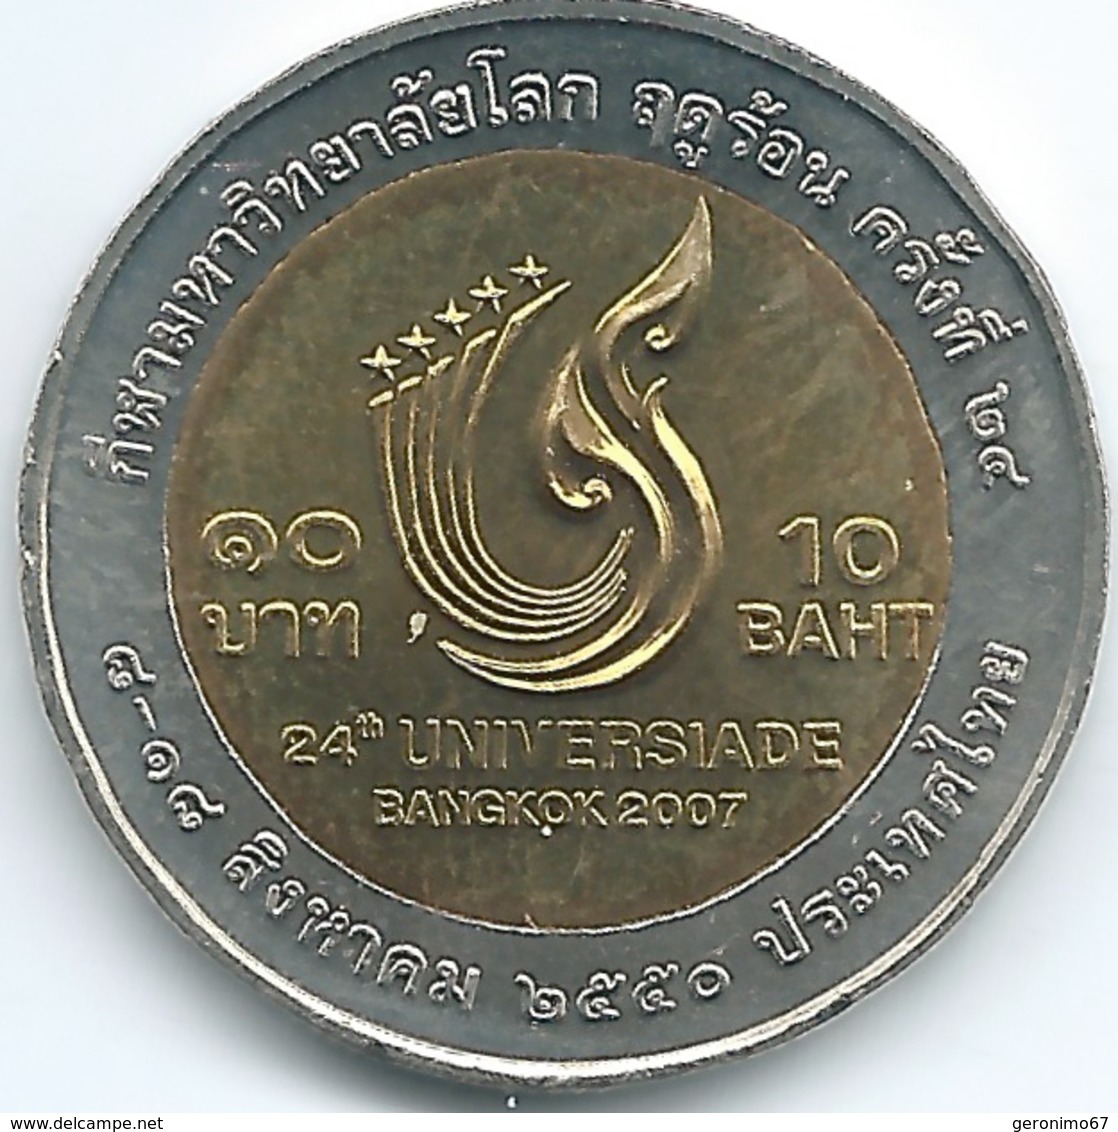 Thailand - Bhumibol - BE2550 (2007) - 10 Baht - 2007 World Universiade, Bangkok - KMY435 - ๒๕๕๐ - Thailand